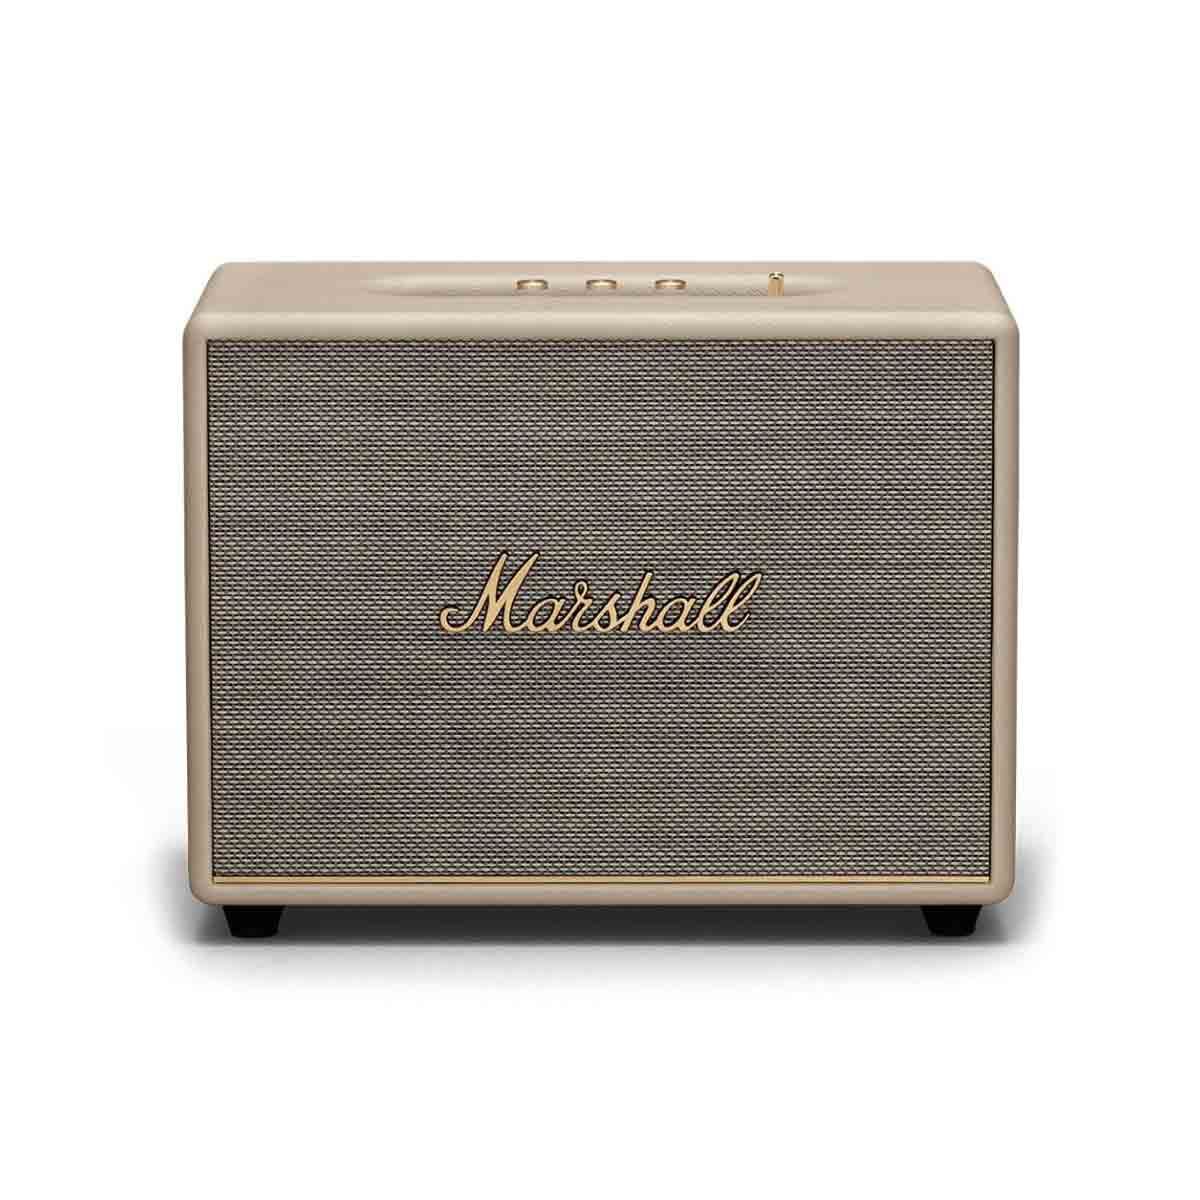 MARSHALL ลำโพงไร้สาย Bluetooth Speaker รุ่น WOBURNIIICM CREAM 150W